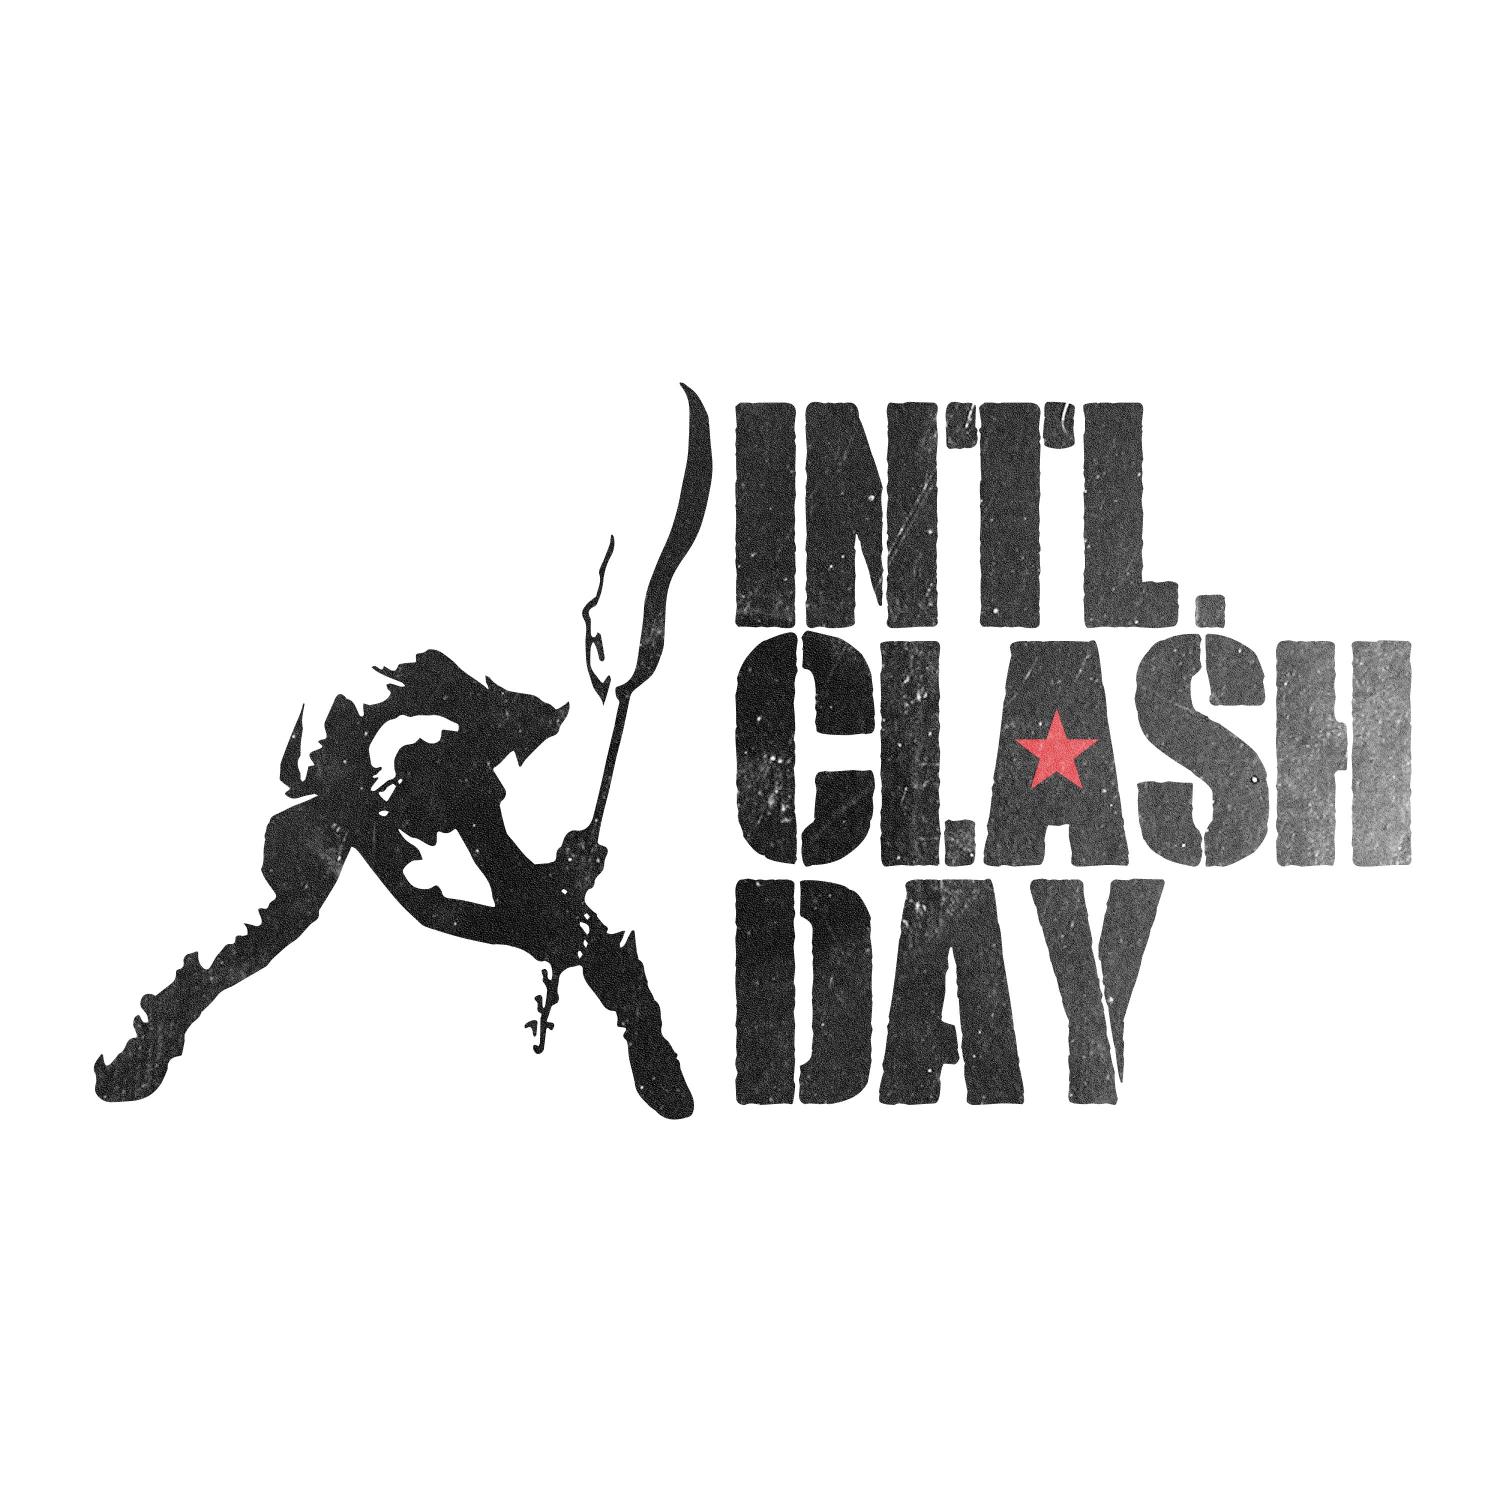 International Clash Day Goes Global